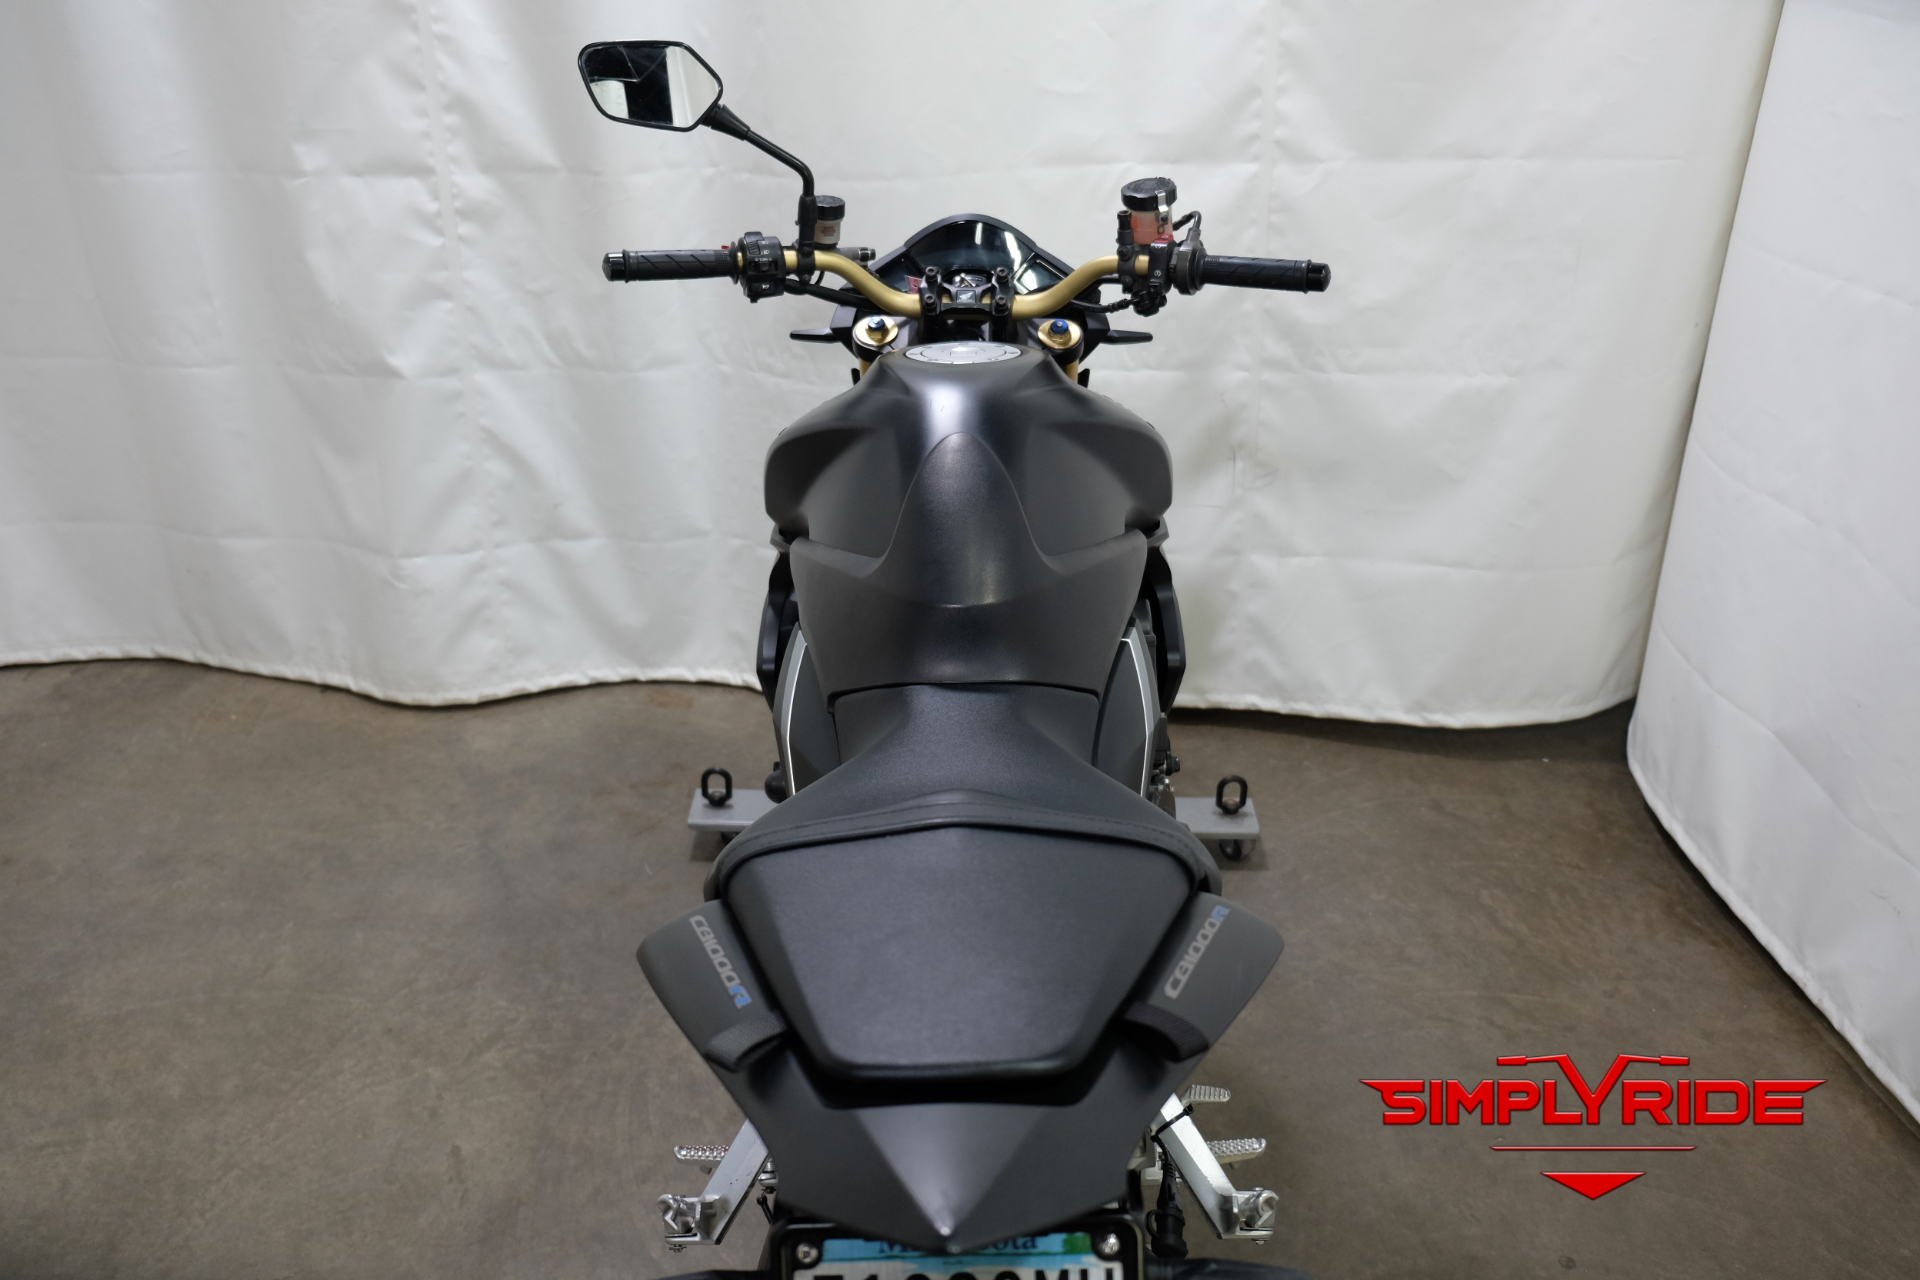 2012 Honda CB1000R in Eden Prairie, Minnesota - Photo 20